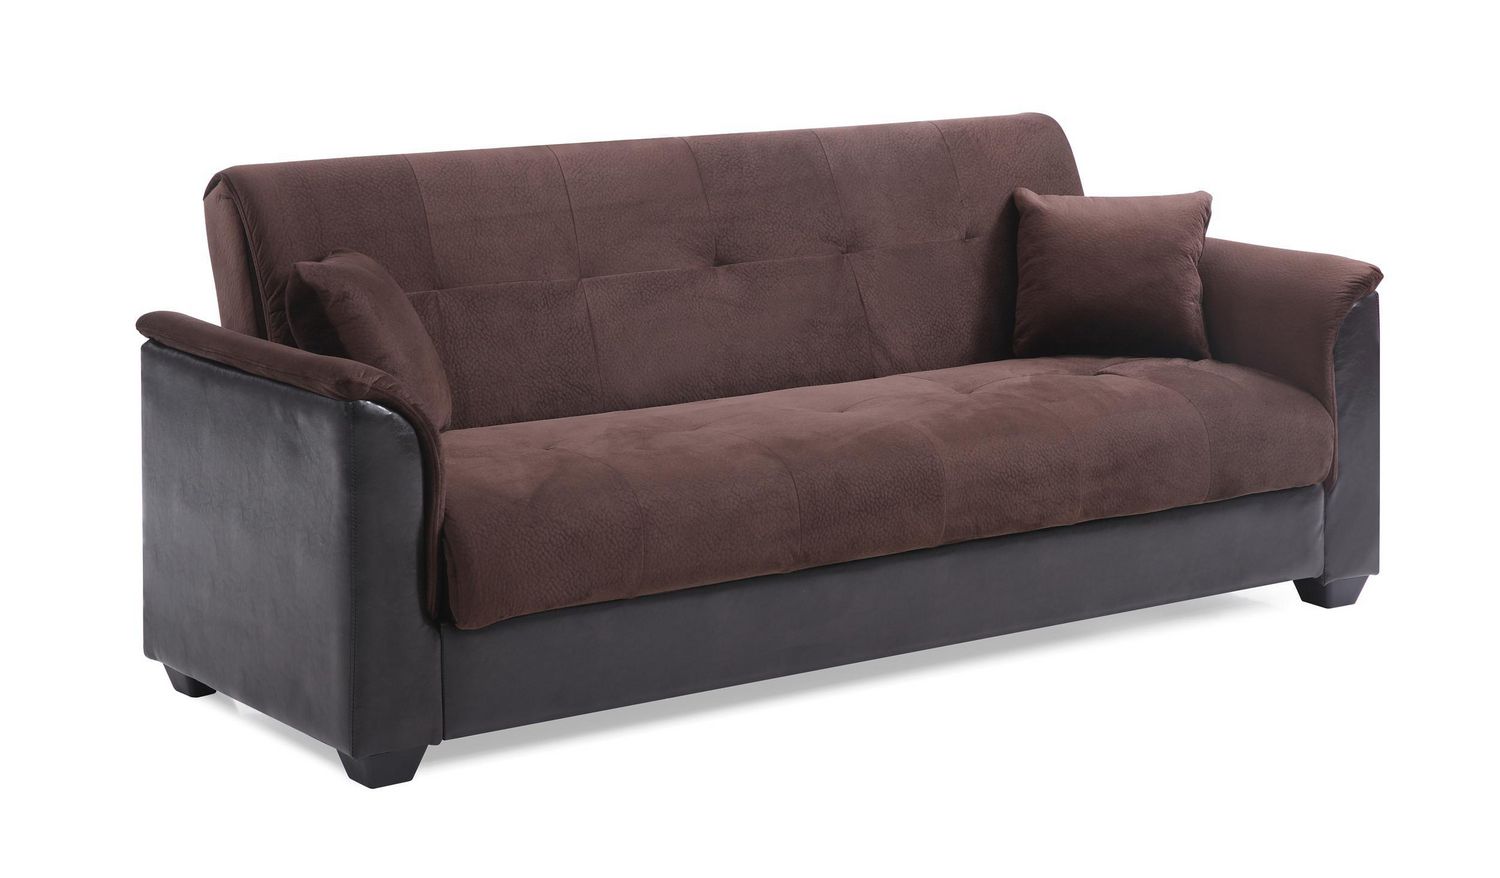 champion futon chocolate sofa bed with storage